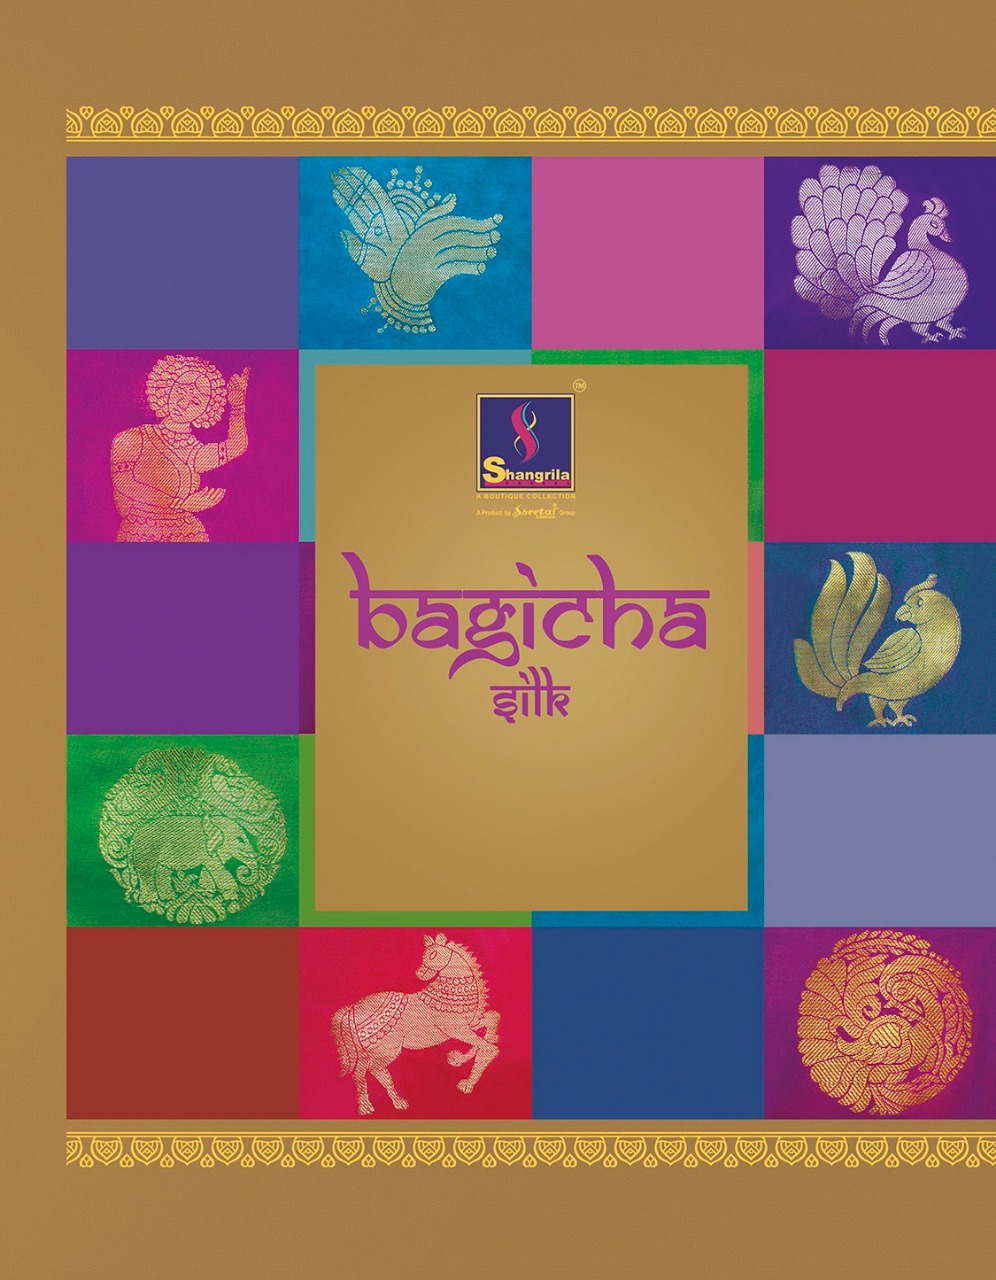 Shangrila presents bagicha silk simple trendy look collection of sarees